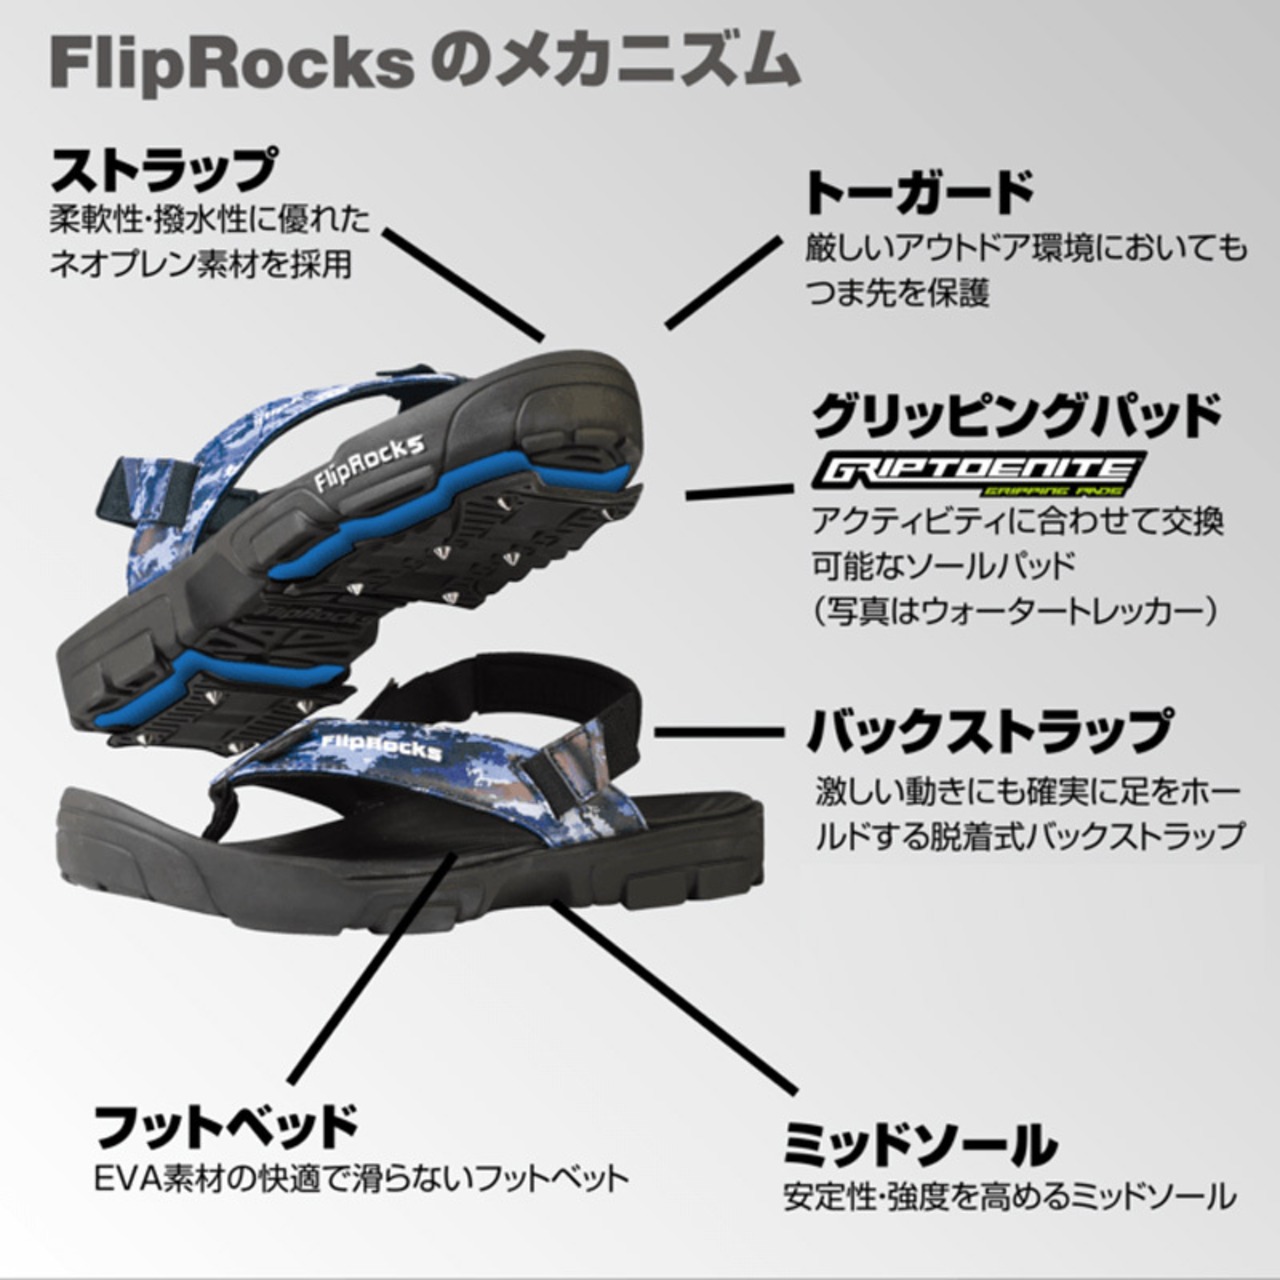 FlipRocks(フリップロックス) アルティメットサンダル スポーツサンダル トレッキングシューズ アウトドア 用品 キャンプ グッズ